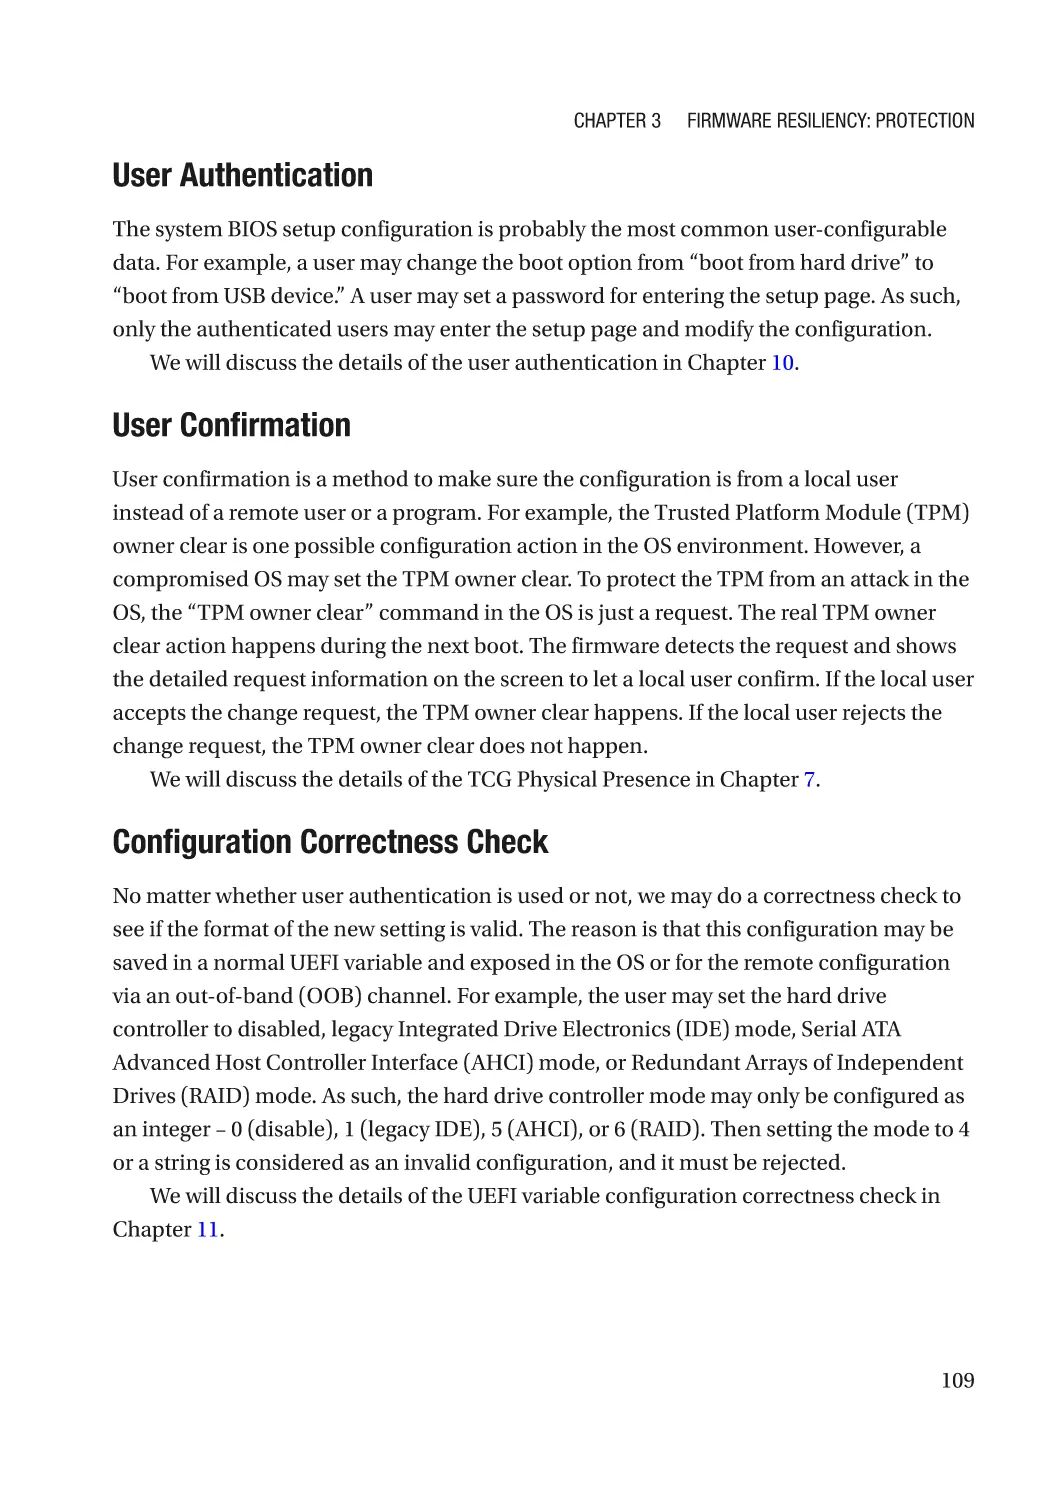 User Authentication
User Confirmation
Configuration Correctness Check